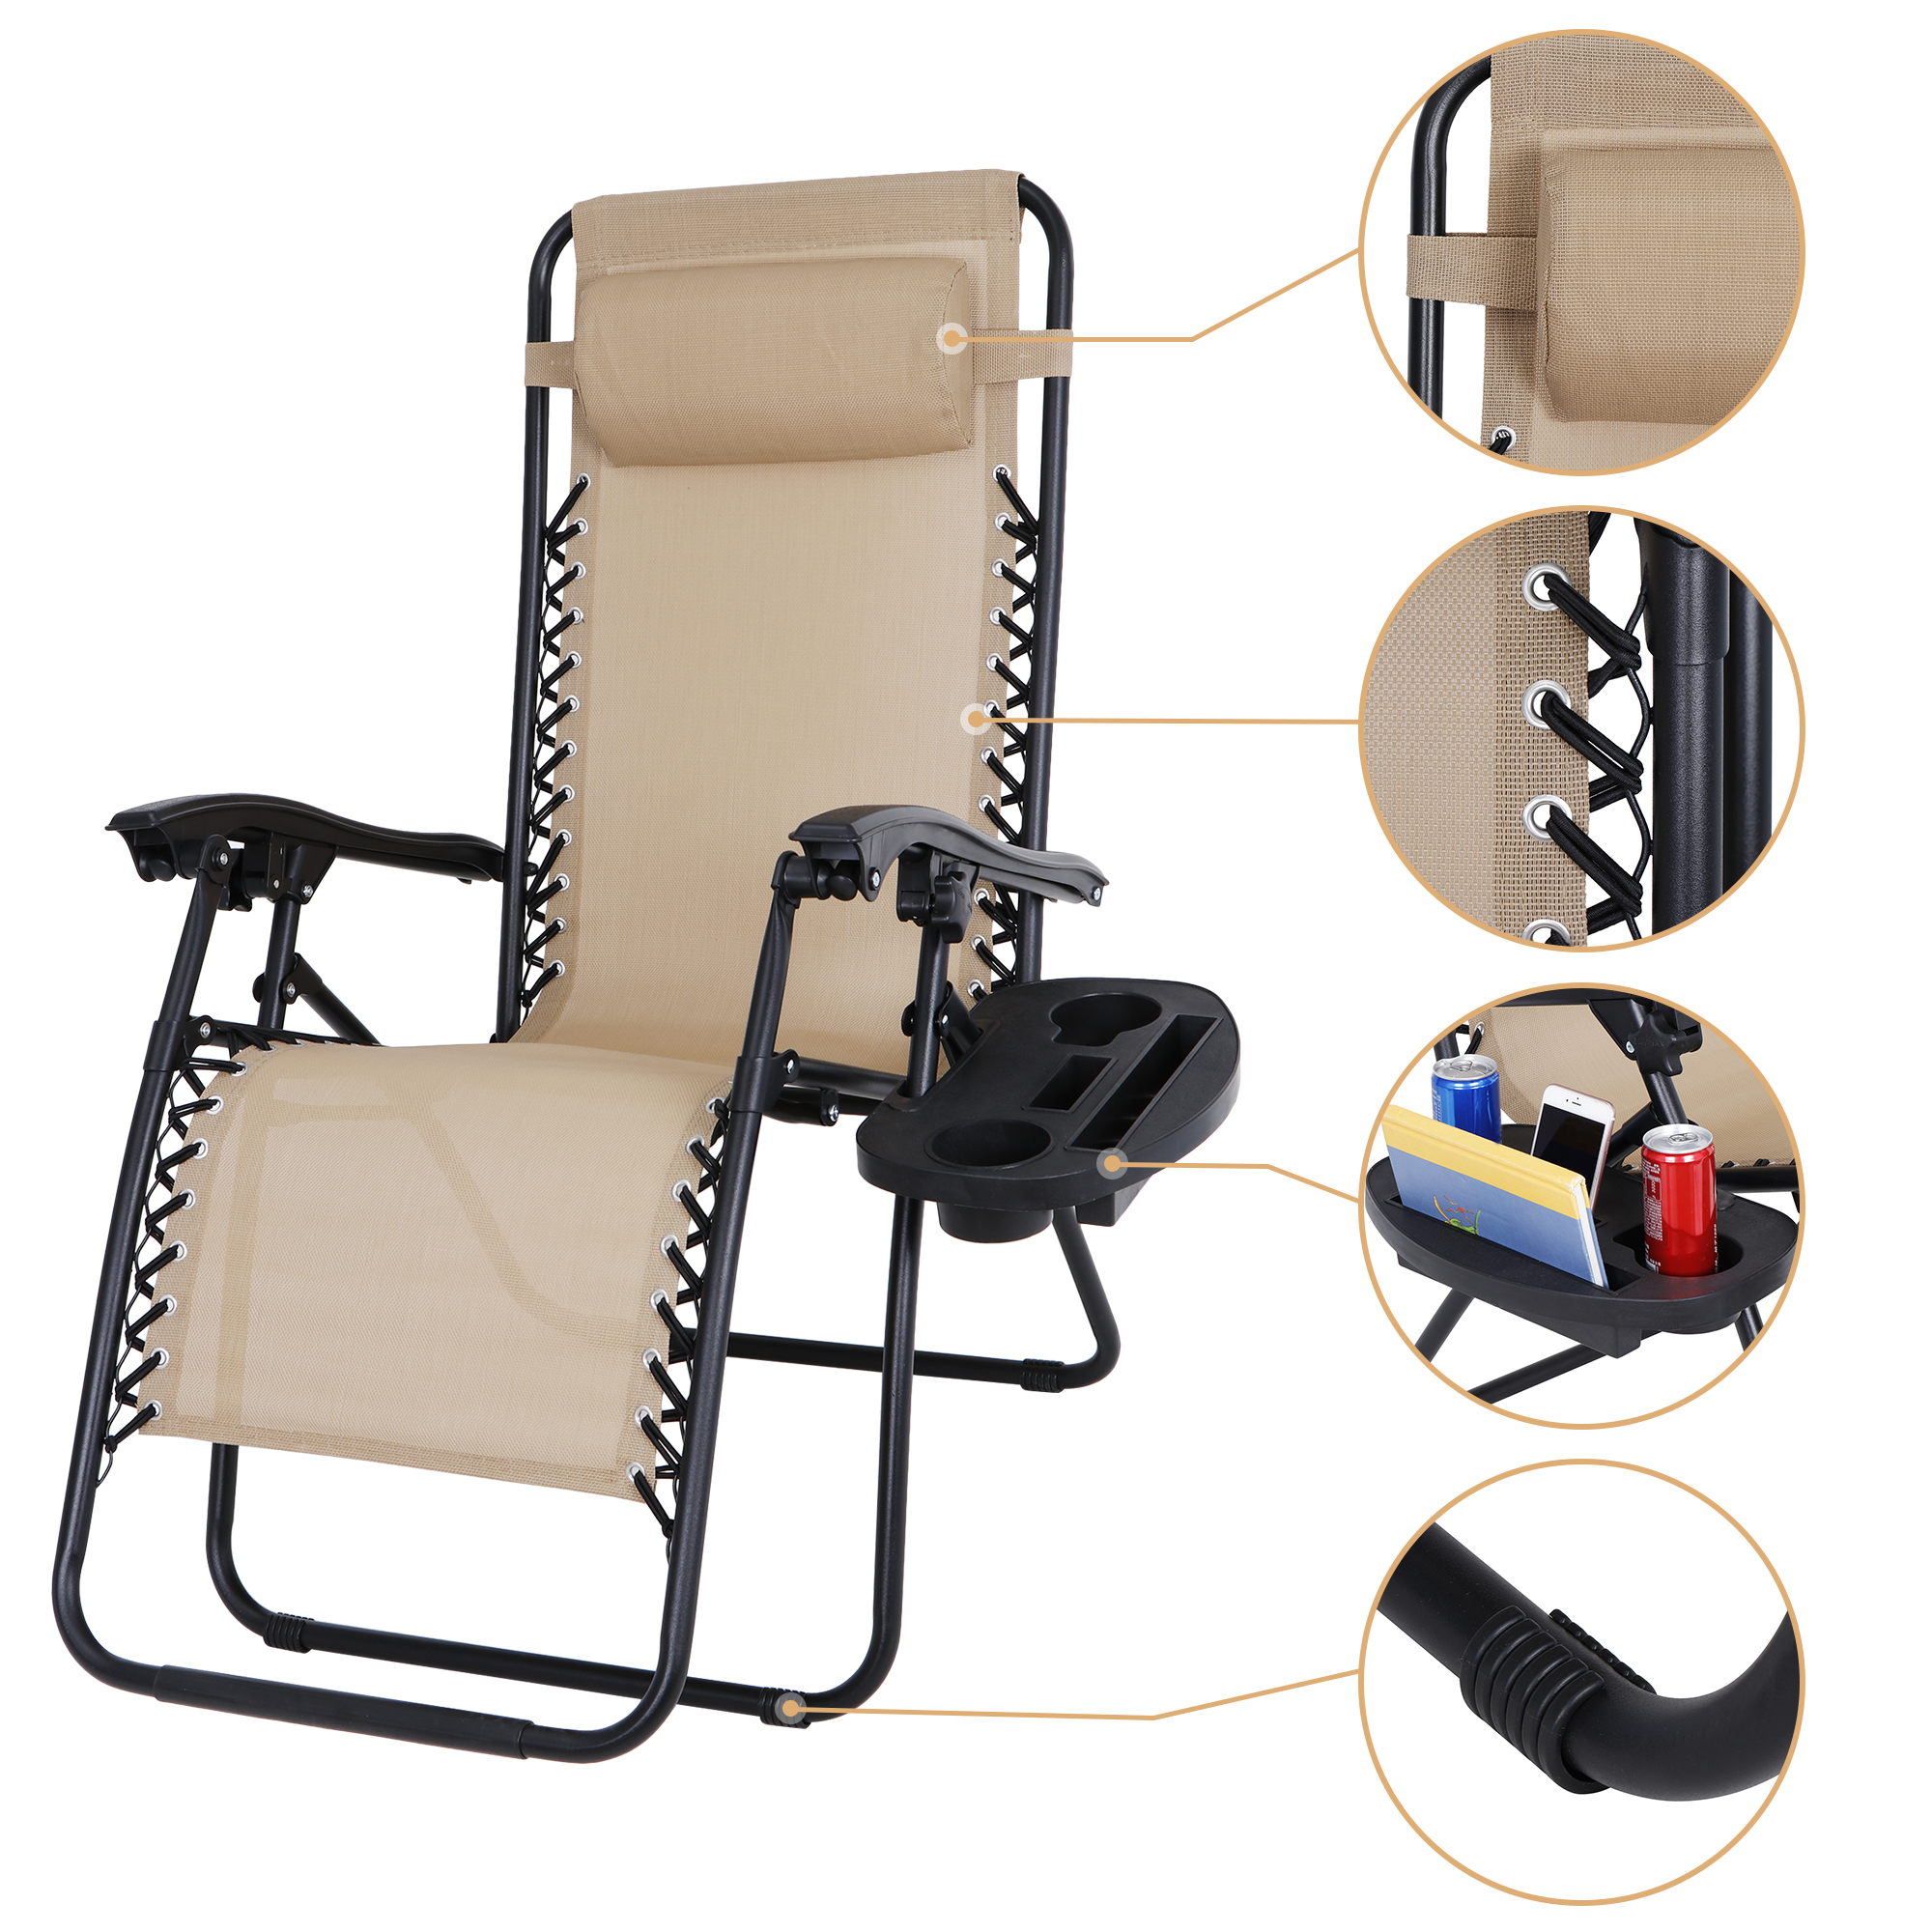 ZENSTYLE Set of 2 Adjustable Recline Chairs Zero Gravity Patio Beach Lounge 330LBS W/ Cup Holders Beige - image 4 of 9